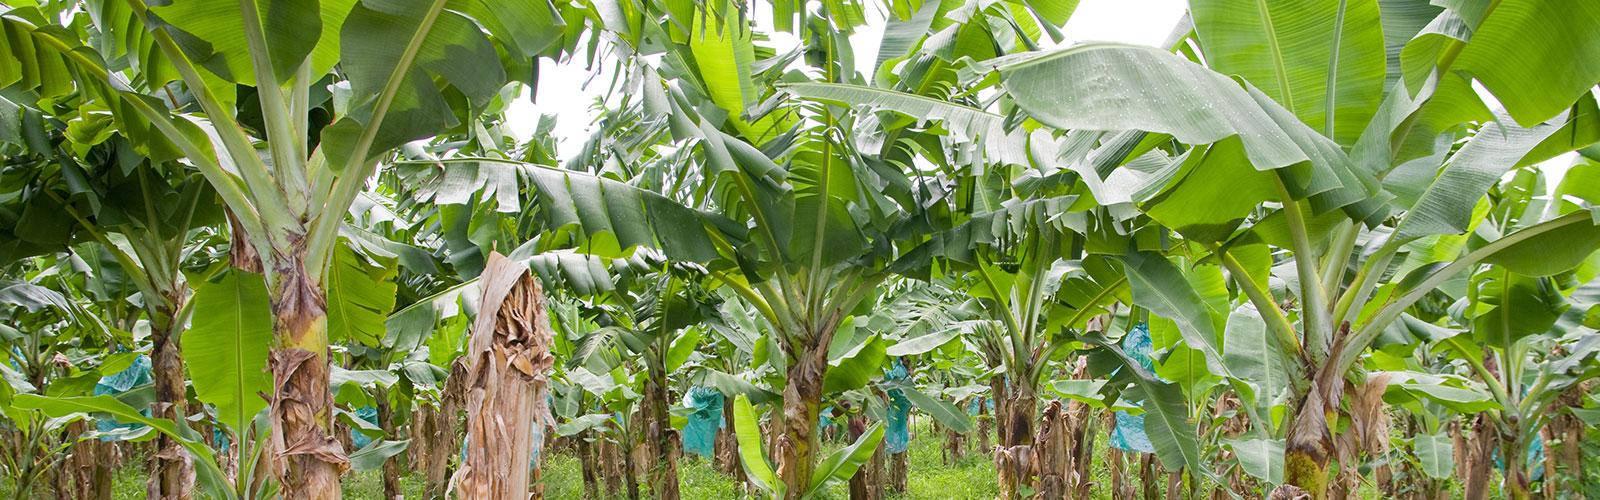 Lush Banana Plantation in French Guiana Wallpaper